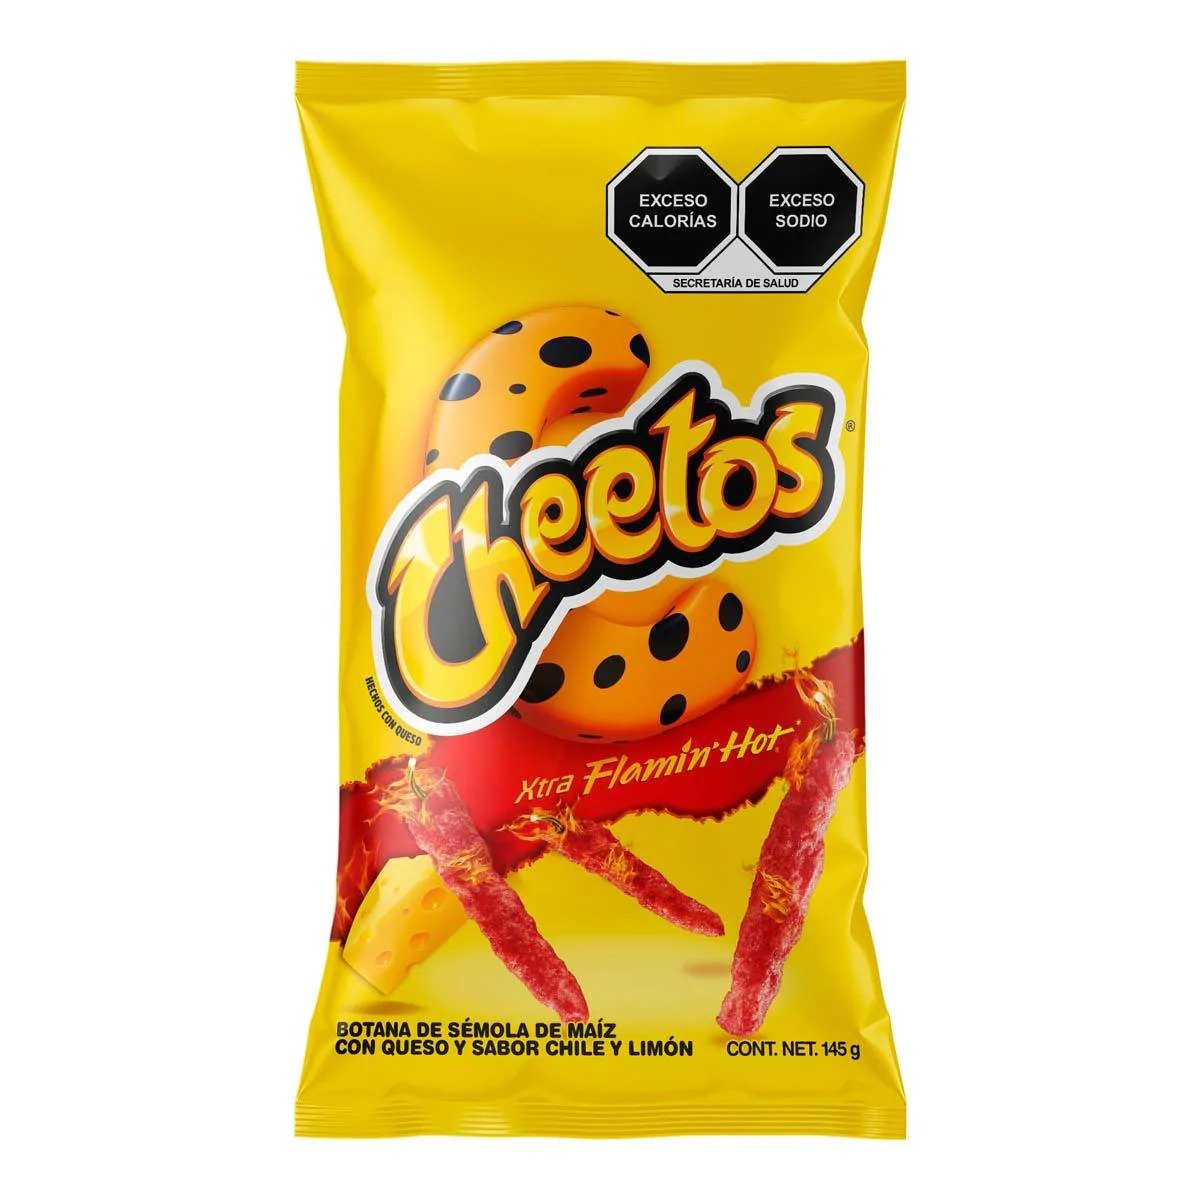 Cheetos Xtra Flamin' Hot Mexico